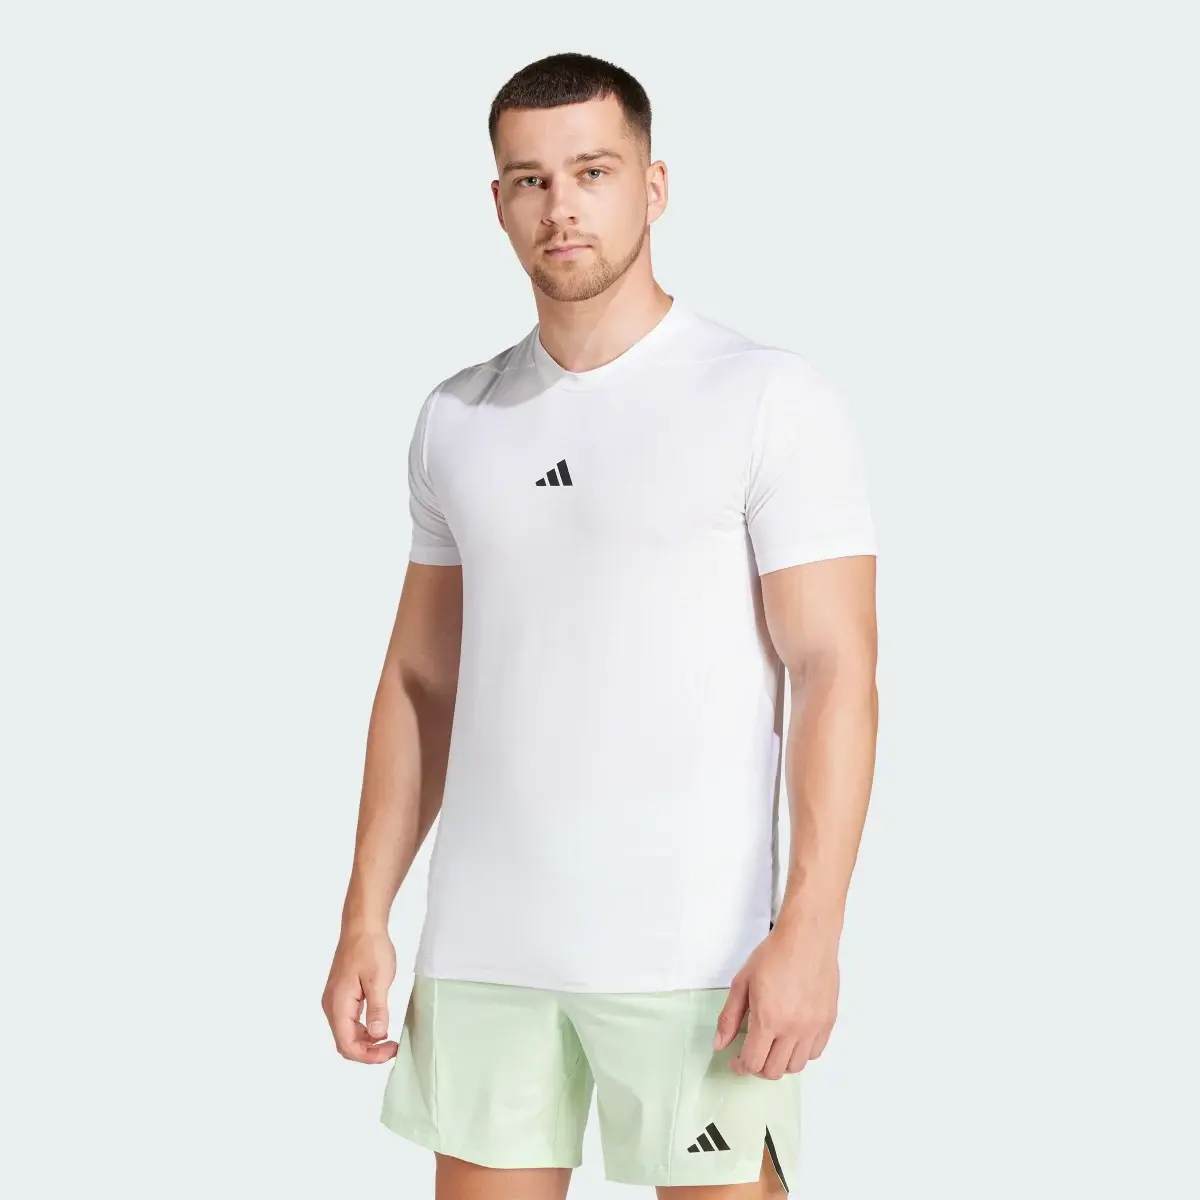 Adidas Designed for Training Workout T-Shirt. 2